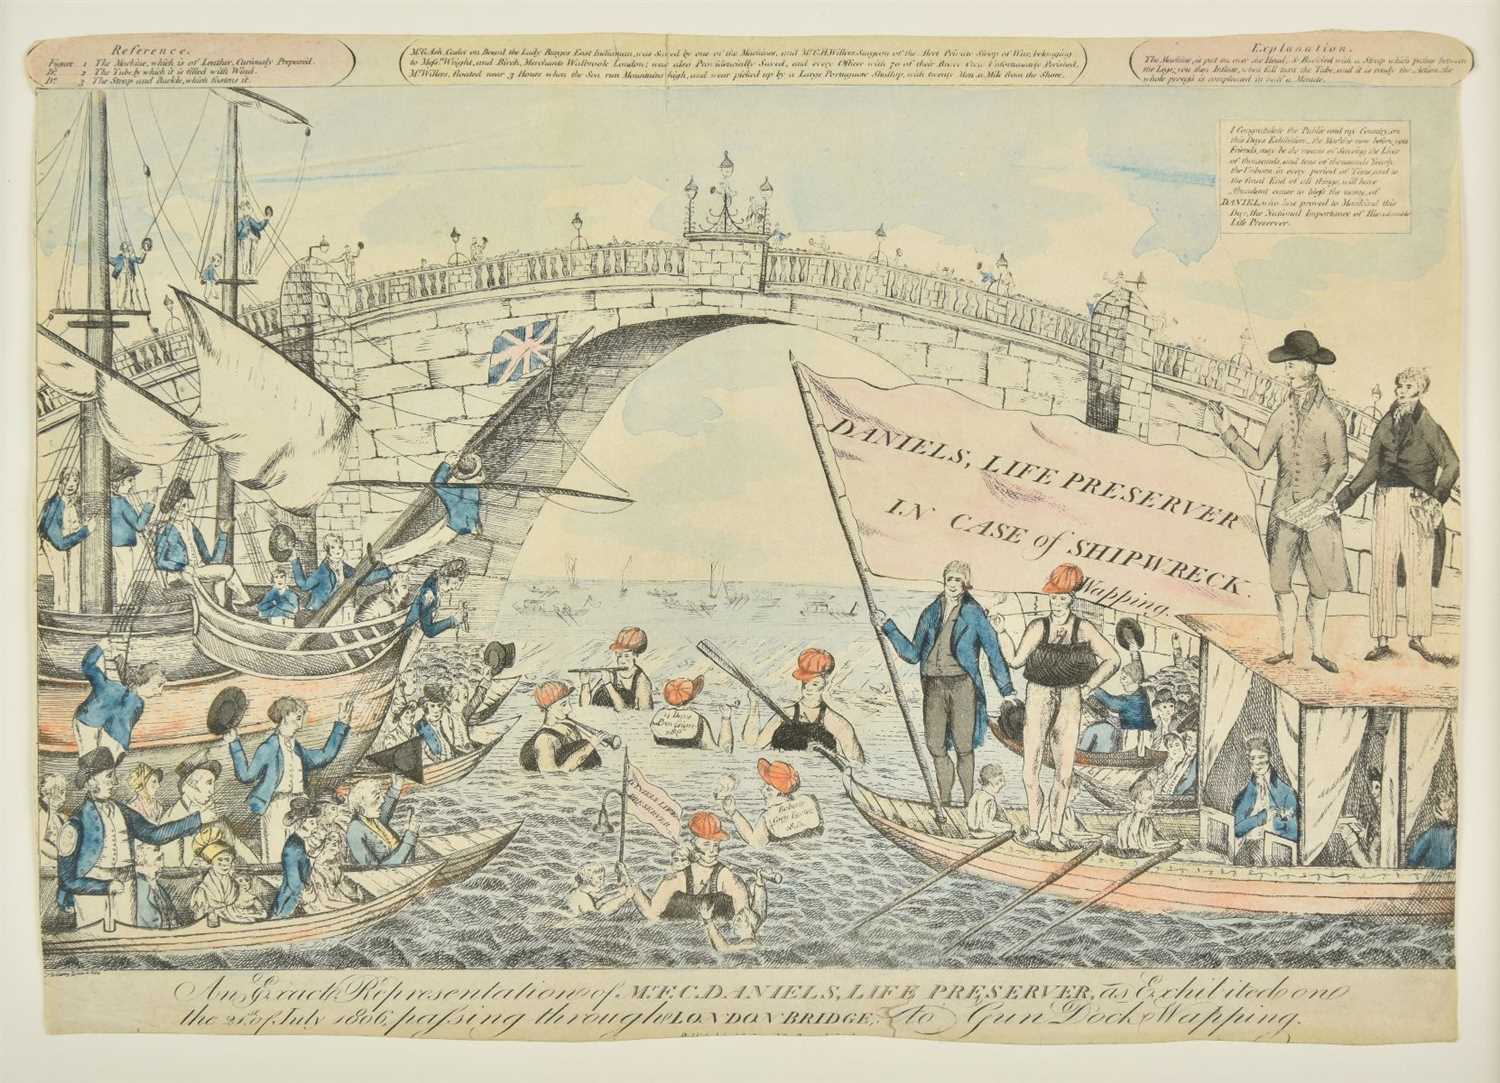 Lot 228 - Lifesaving. An exact representation of Mr F. C. Daniels Life Preserver, on 21st July 1806